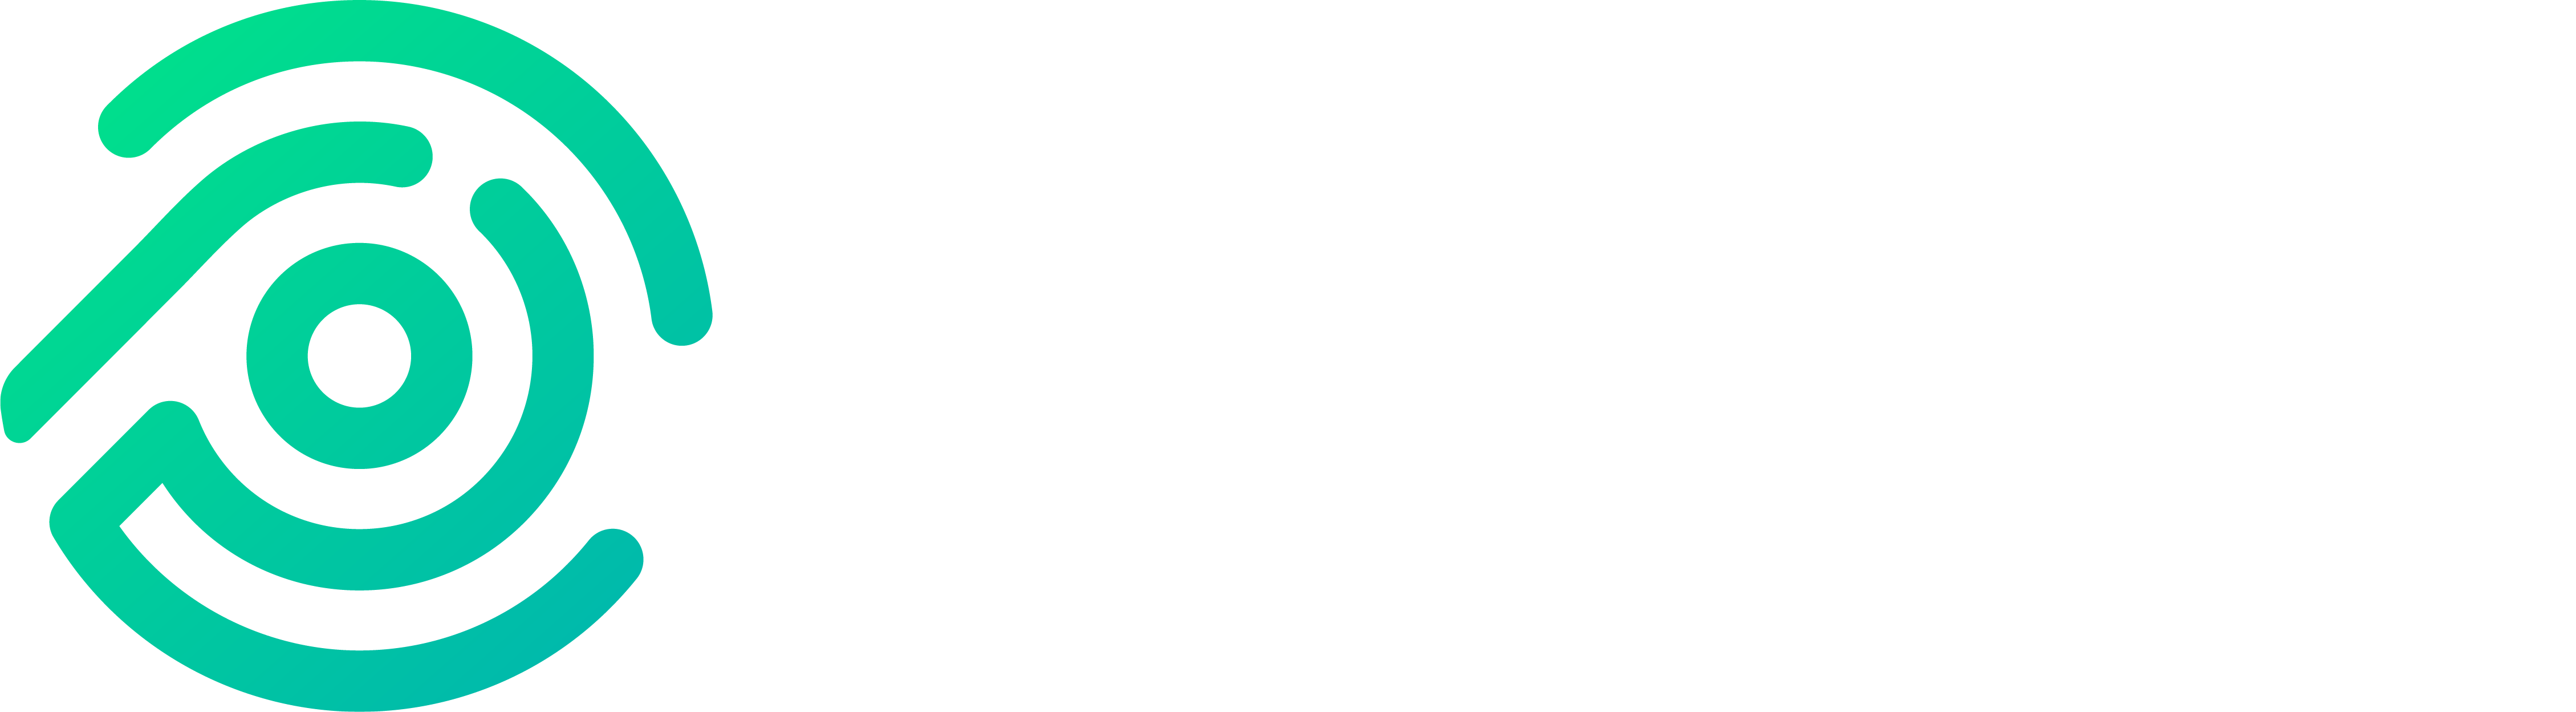 ozow gateway logo